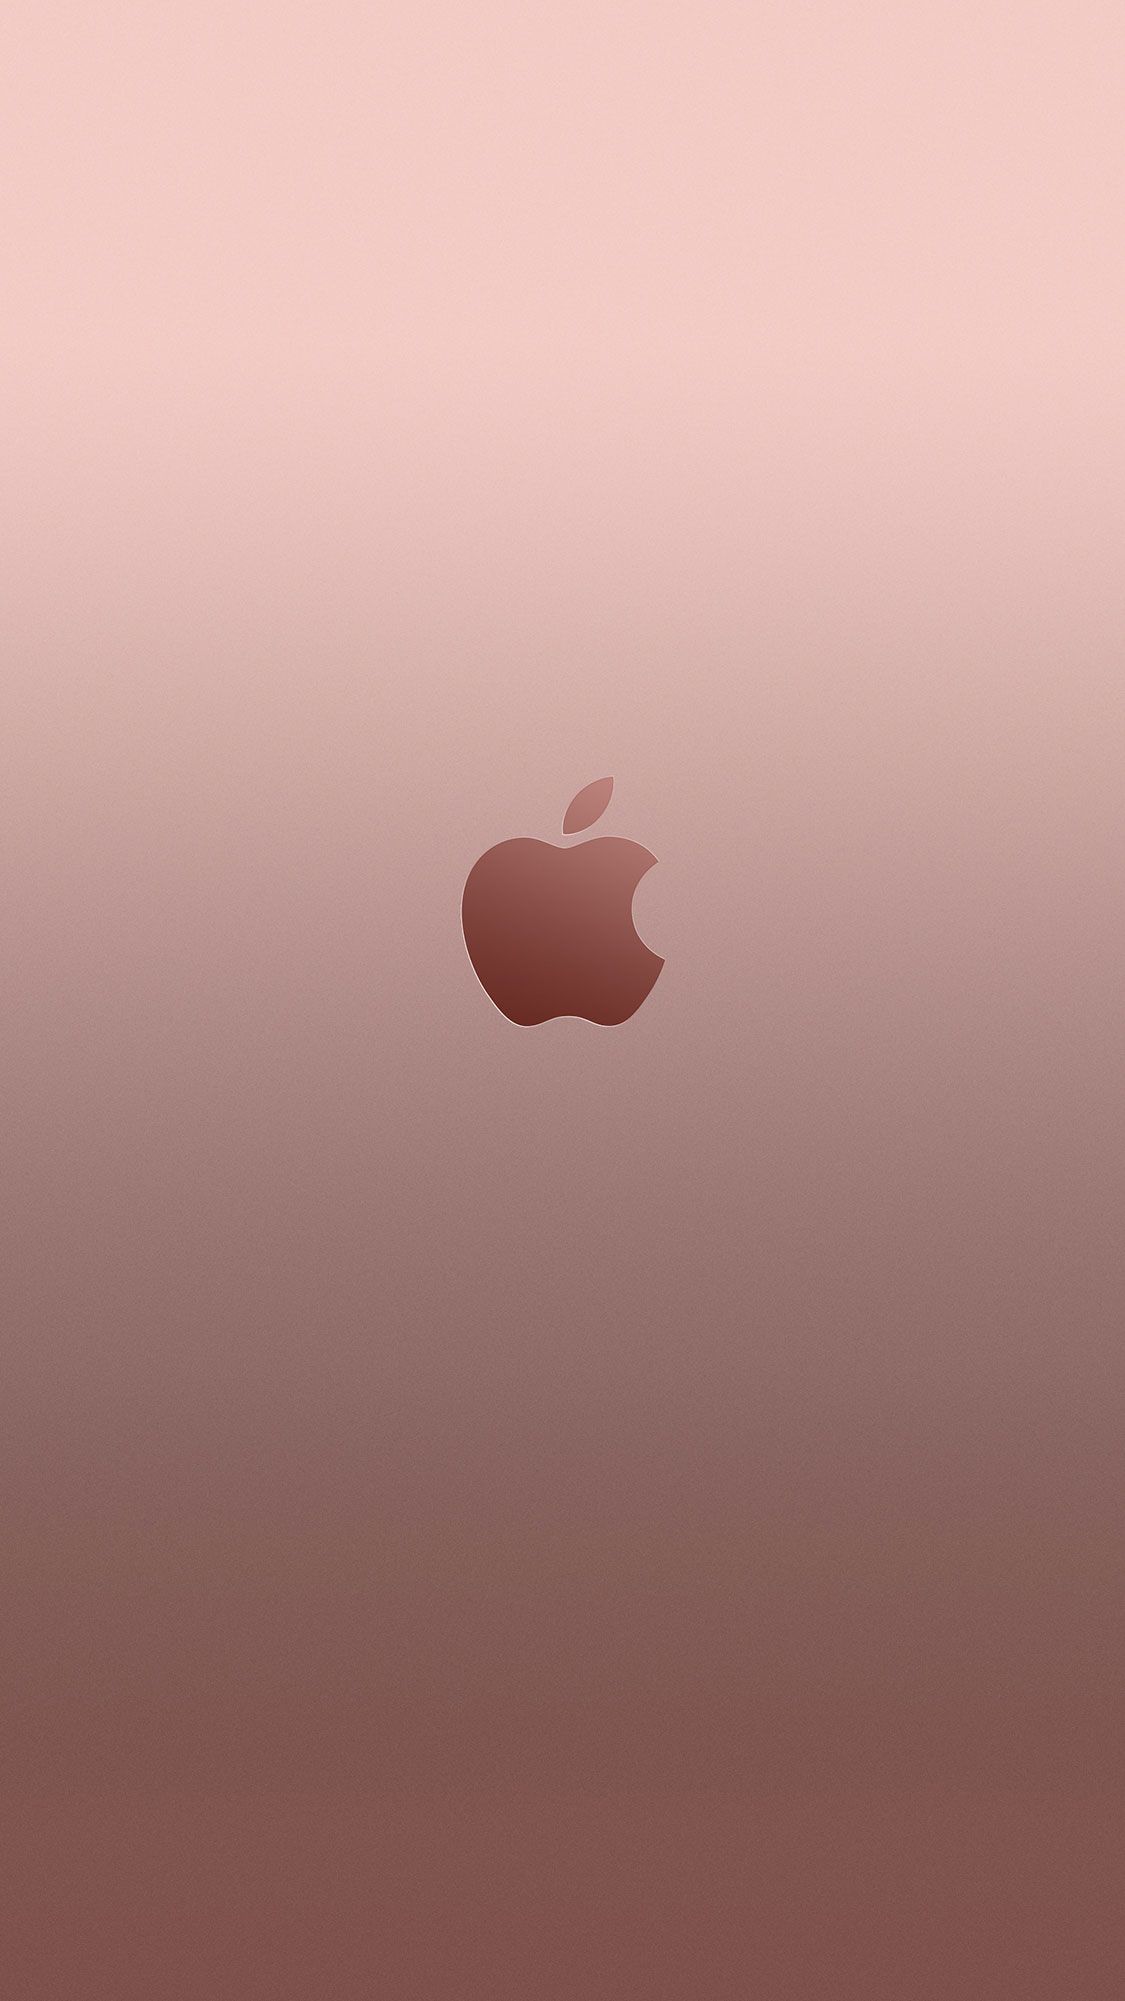 iphone 6s wallpaper tumblr,pink,sky,heart,illustration,calm